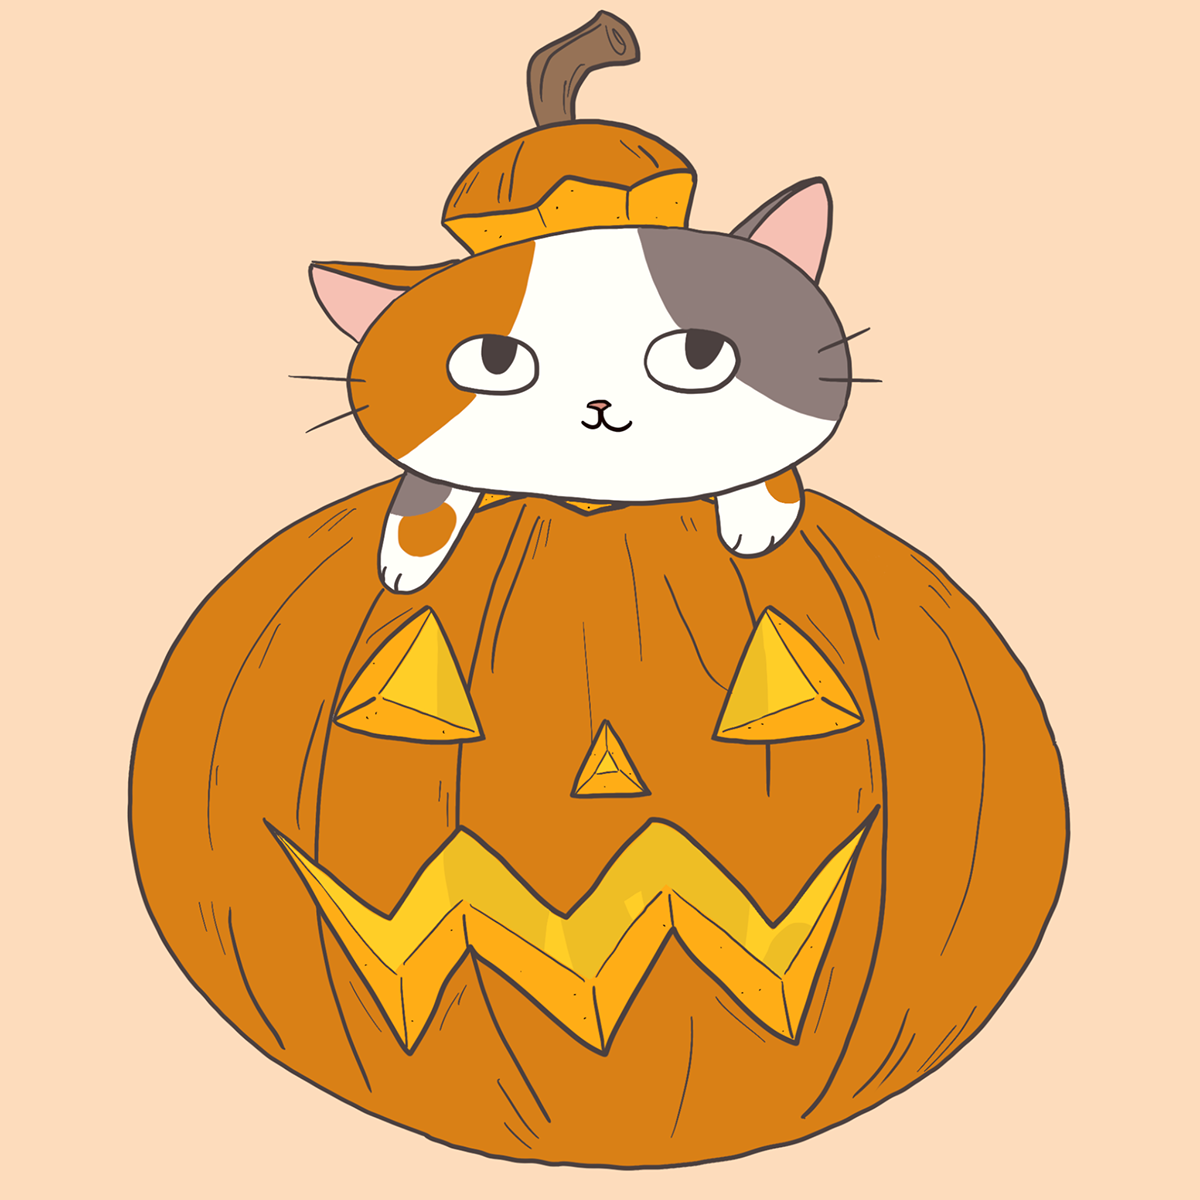 Artober autumn Digital Art  Halloween inktober2020 Magic   Procreate pumpkin spooky witch